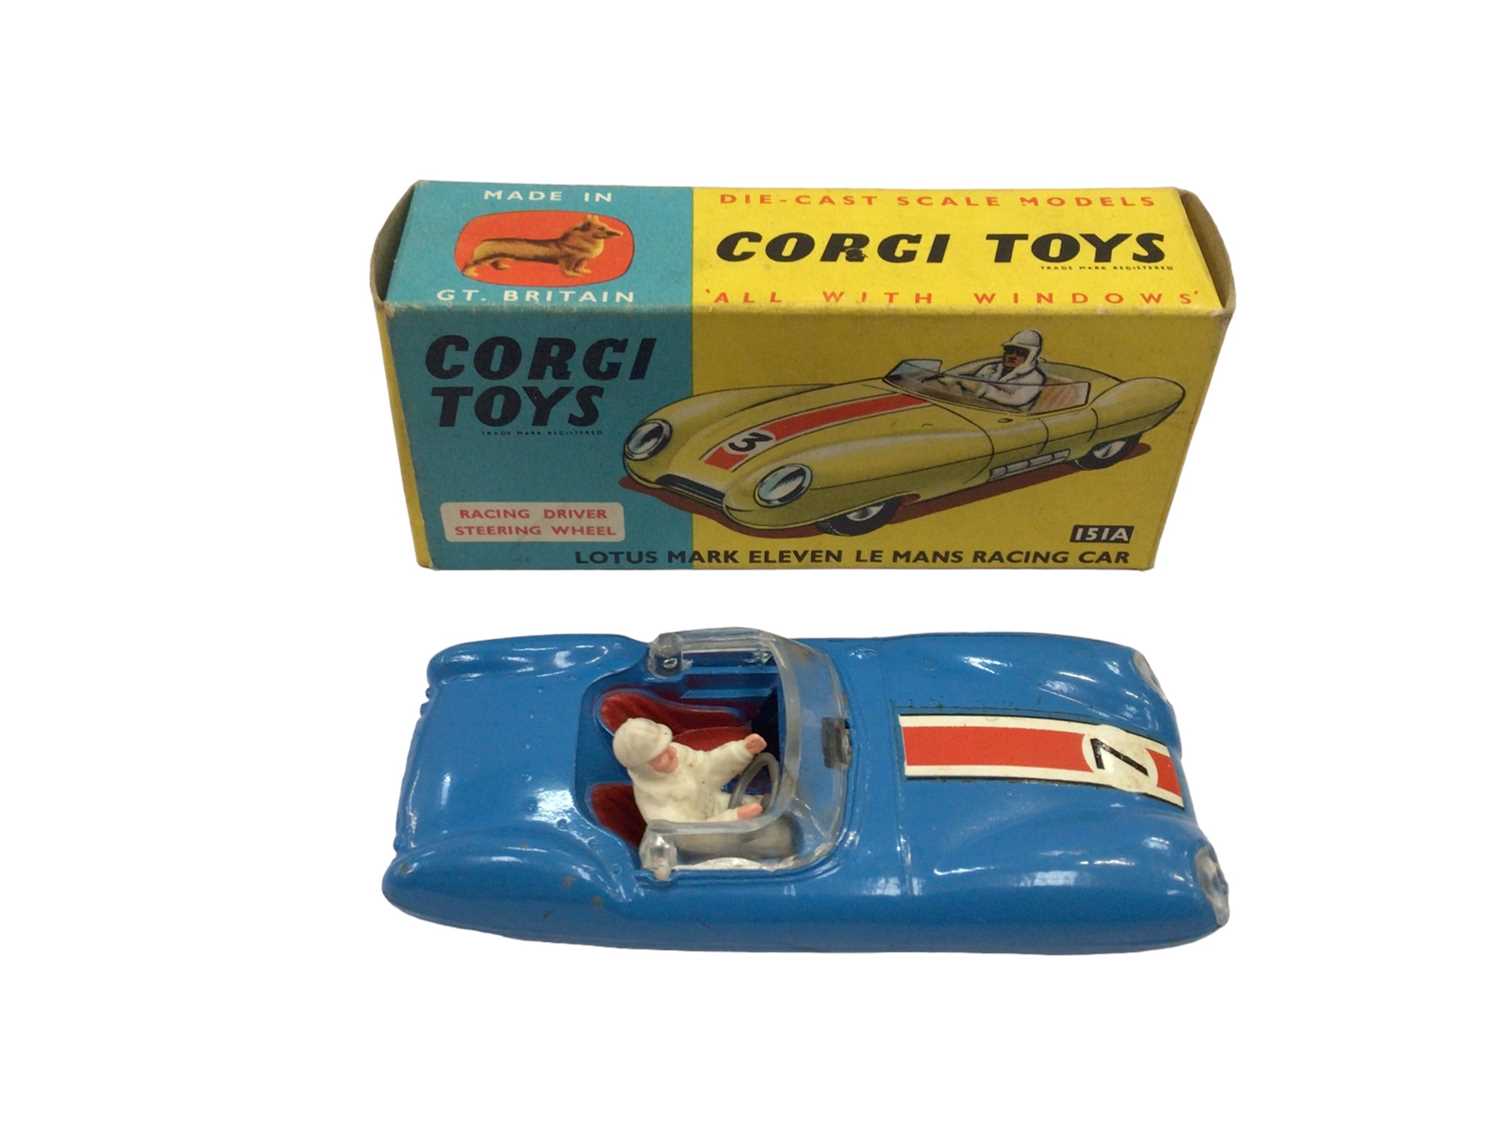 Corgi Major Ecurie Ecosse gift set No. 16 in original box - Image 4 of 6